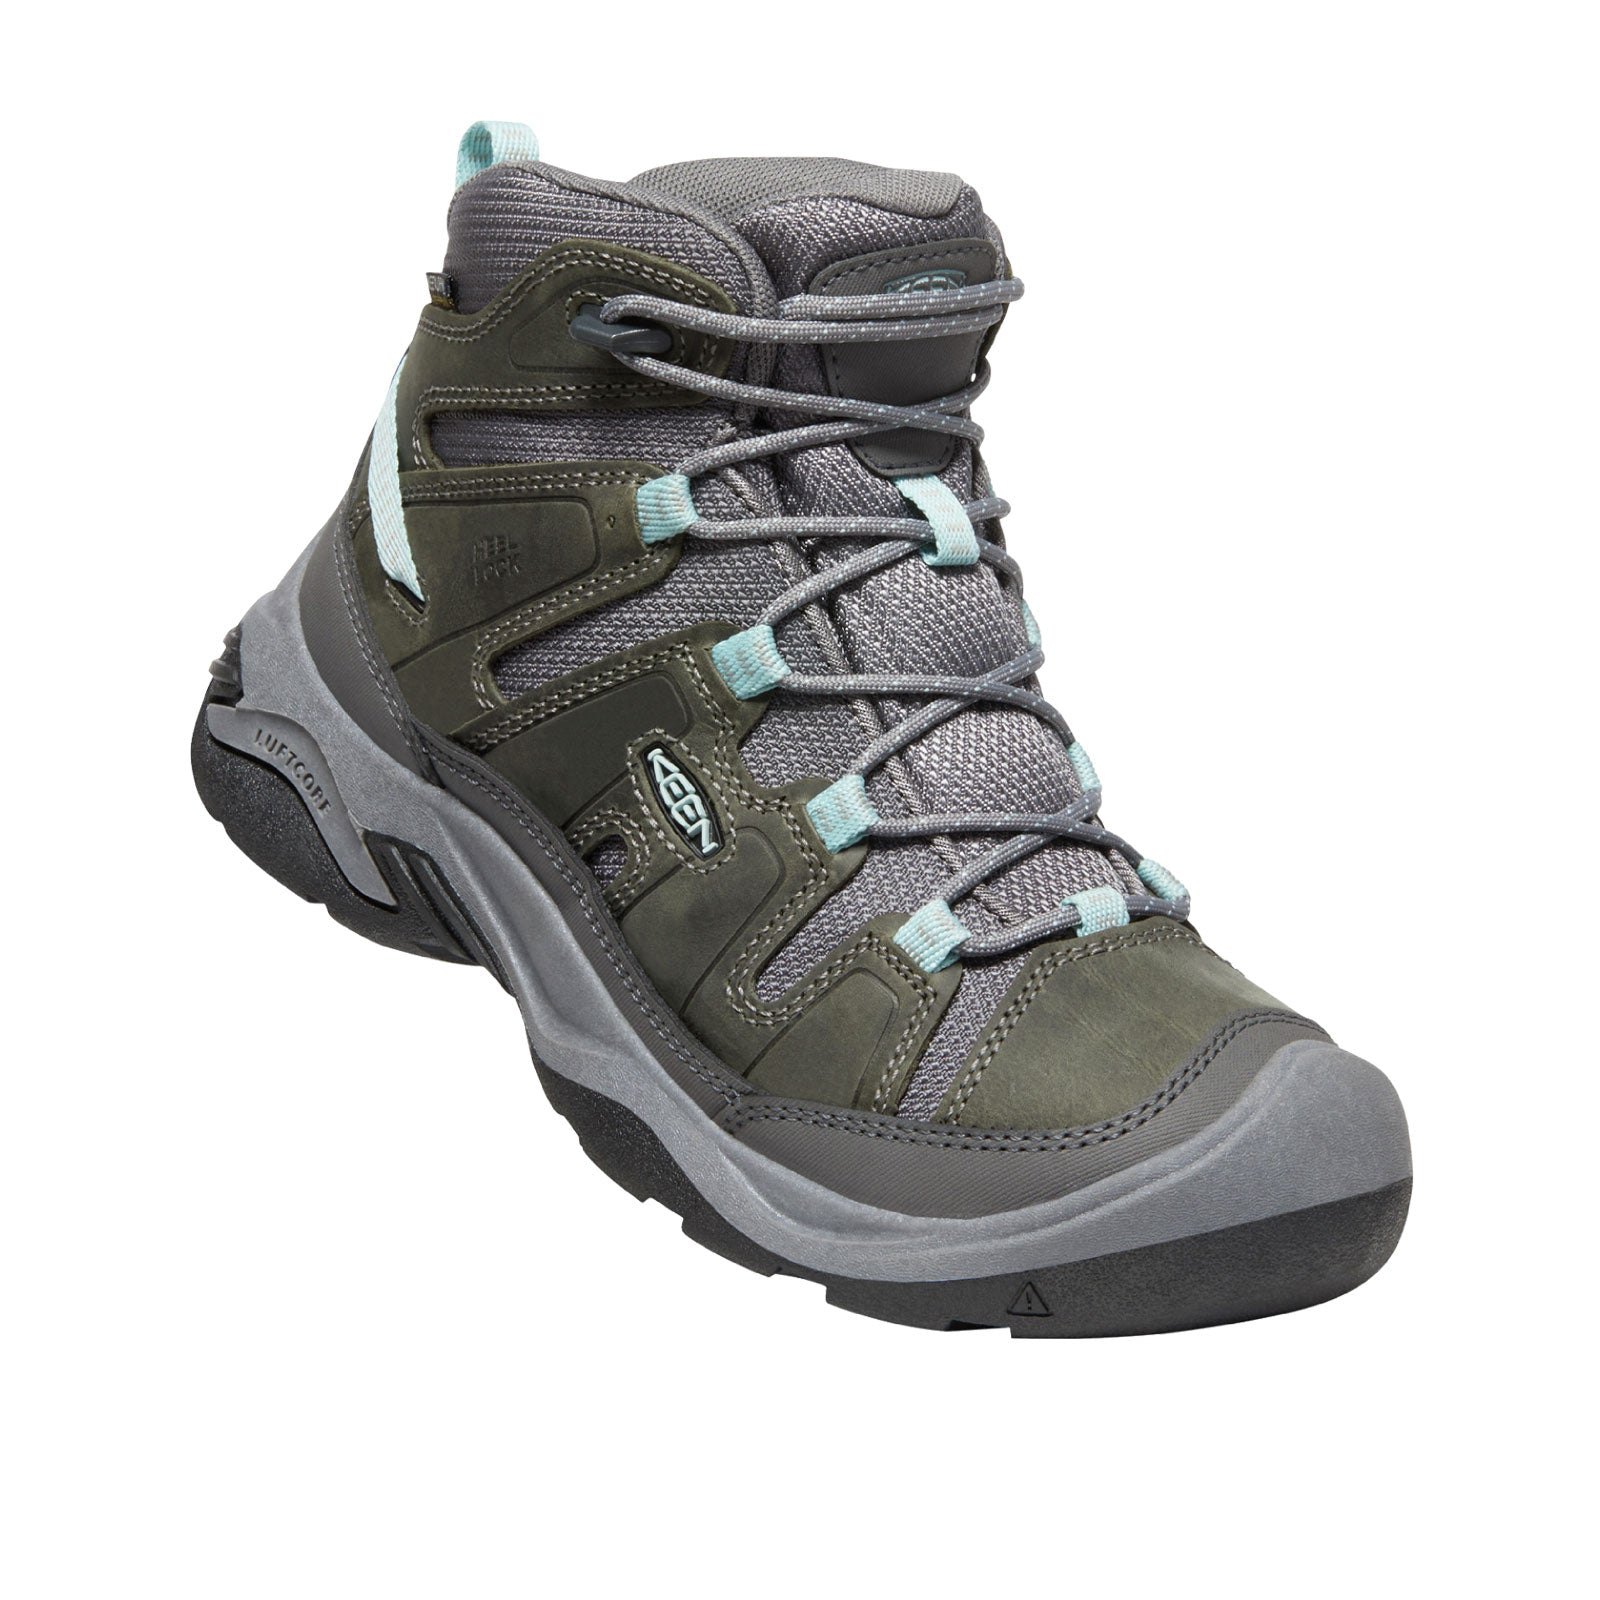 Keen Circadia Mid Waterproof Wide Hiking Boot (Women) - Steel Grey/Cloud Blue Boots - Winter - Mid Boot - The Heel Shoe Fitters